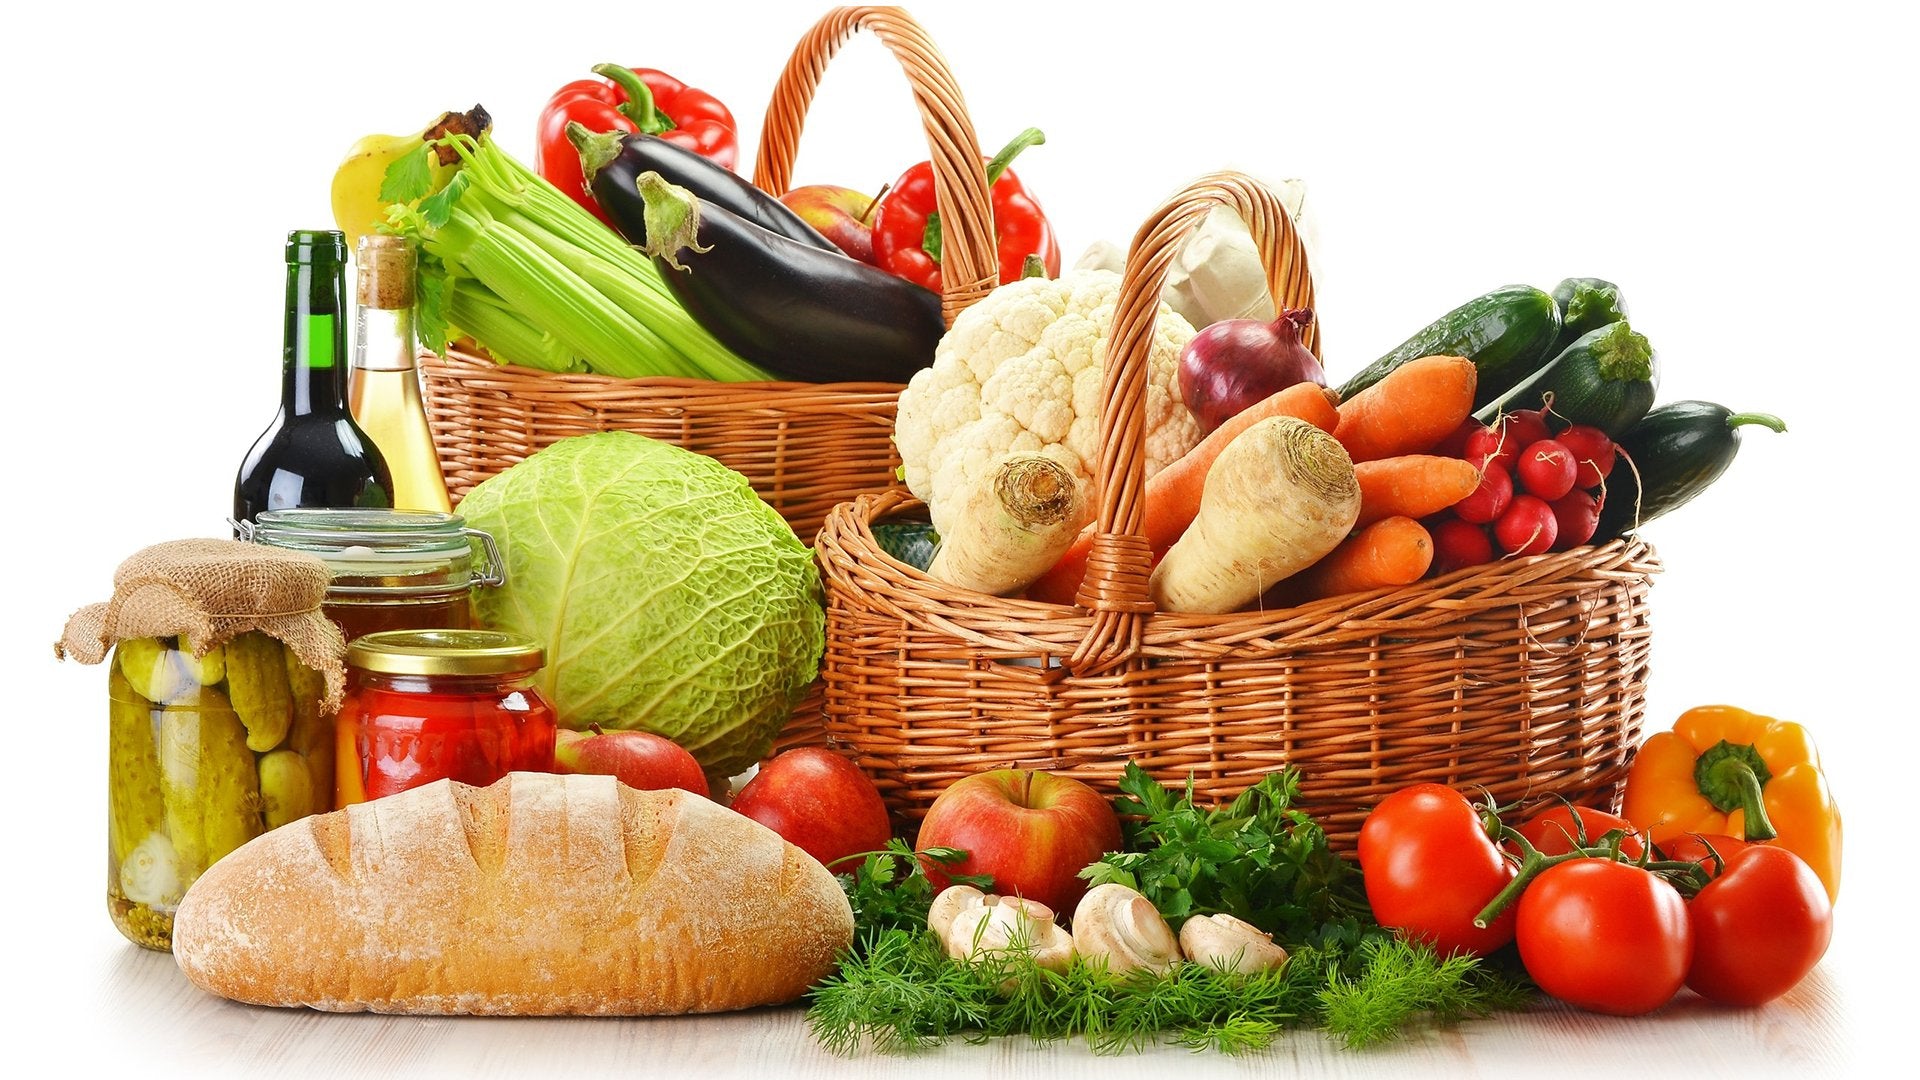 Farm Fresh Fruits & Vegetables